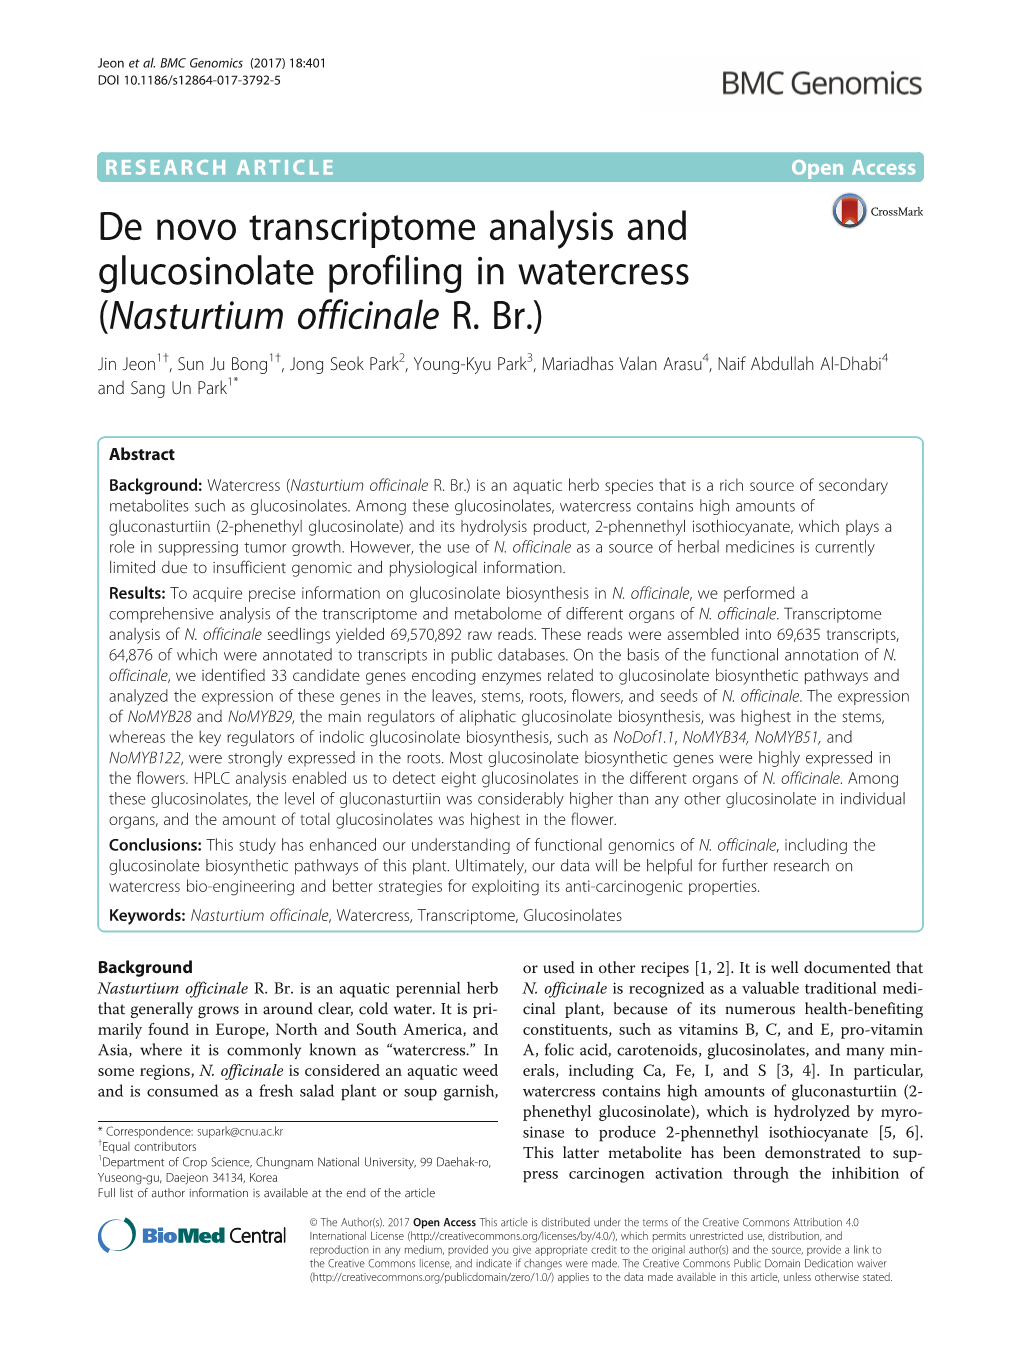 De Novo Transcriptome Analysis and Glucosinolate Profiling in Watercress (Nasturtium Officinale R